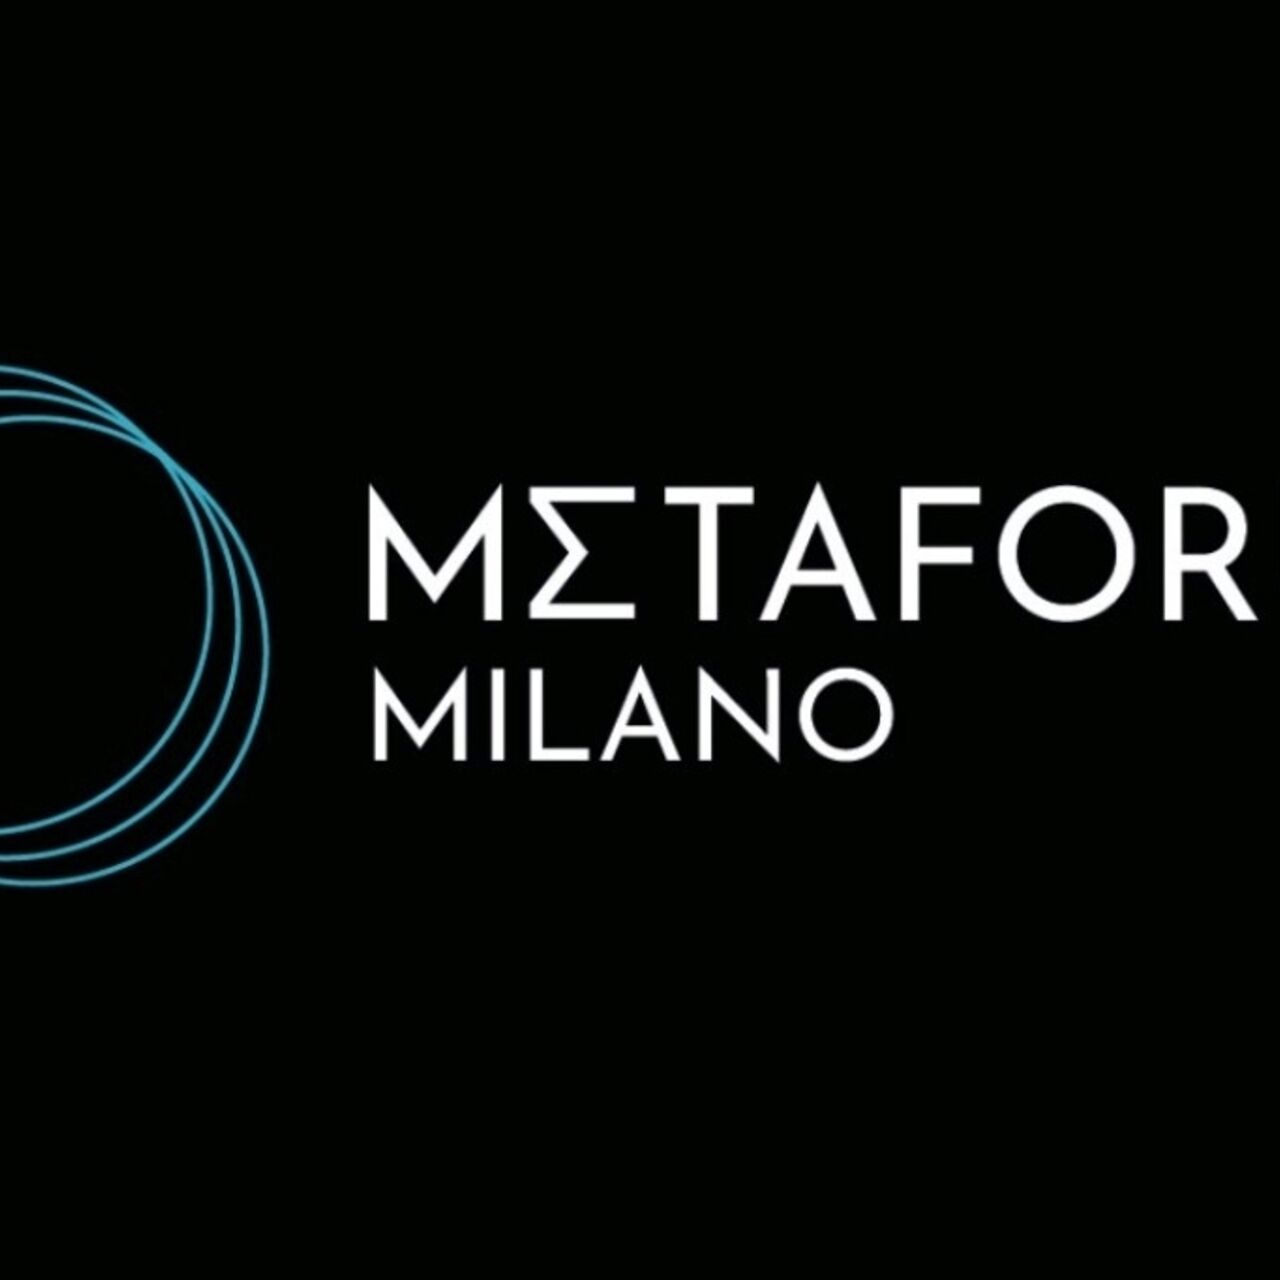 Metaforum: το λογότυπο του Metaforum Milano